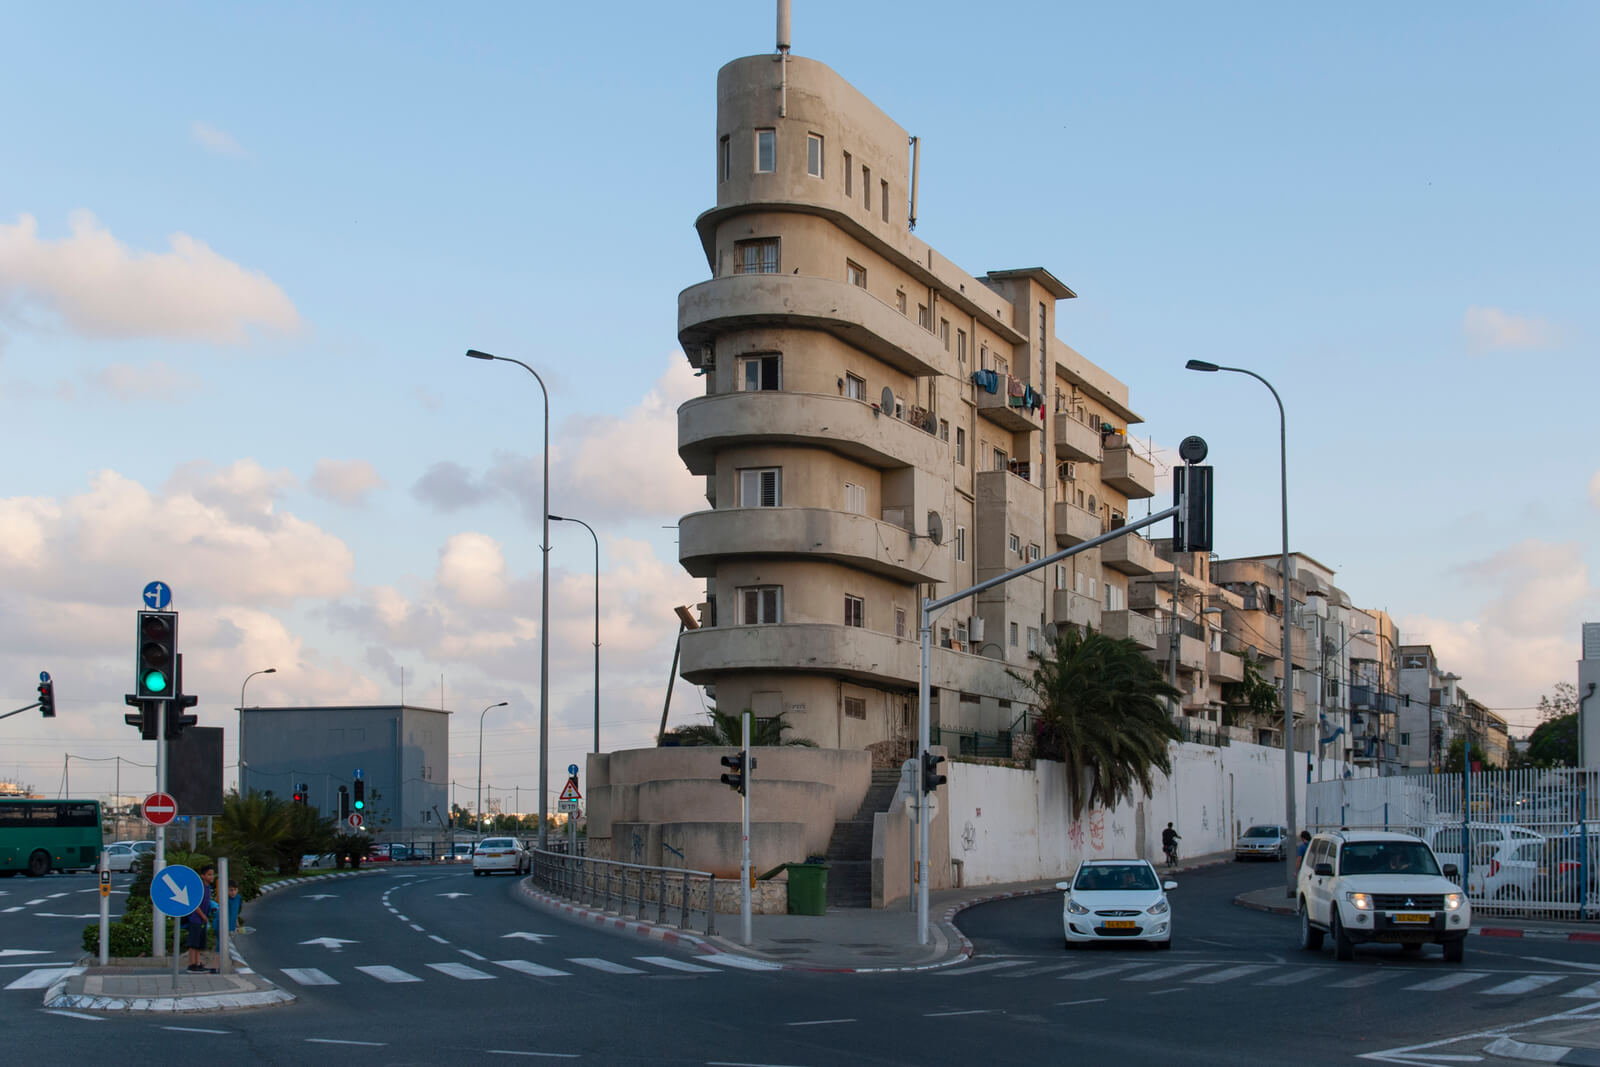 Tel Aviv Urban Tour - Architecture, Food and Street Art Just $65